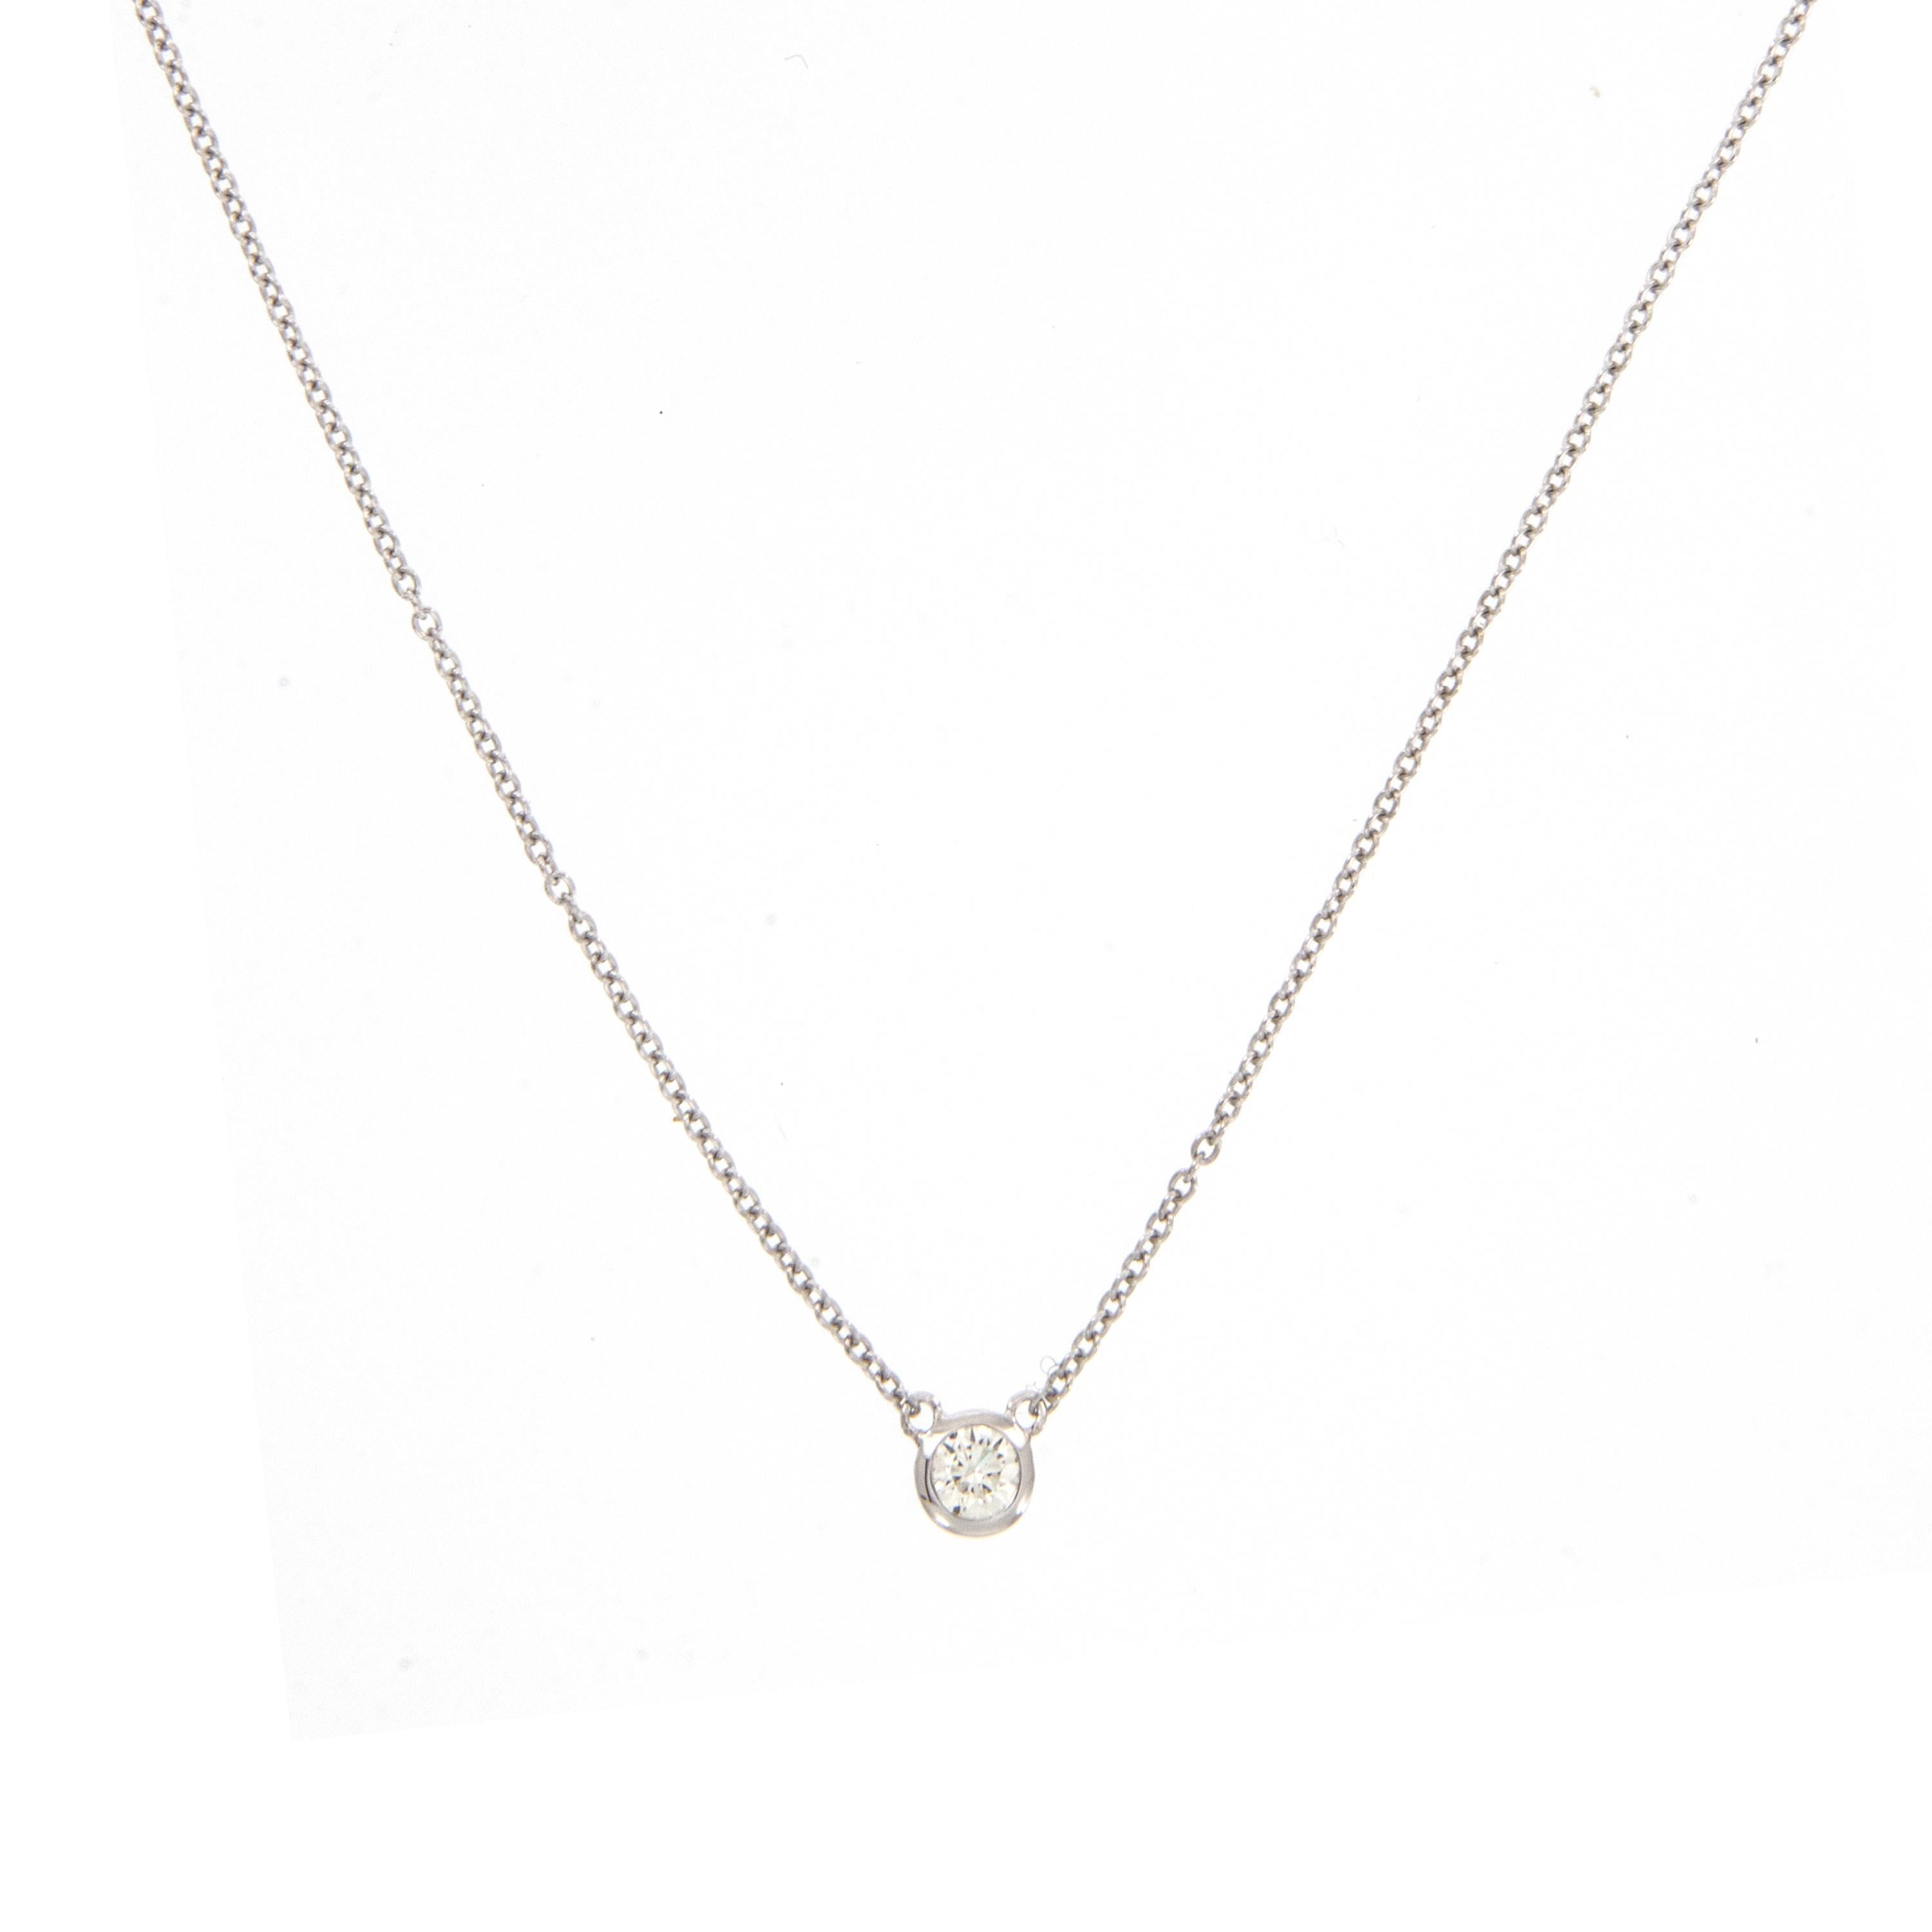 Contemporary 18 Karat White Gold 0.05 Carat Diamond Solitaire Necklace